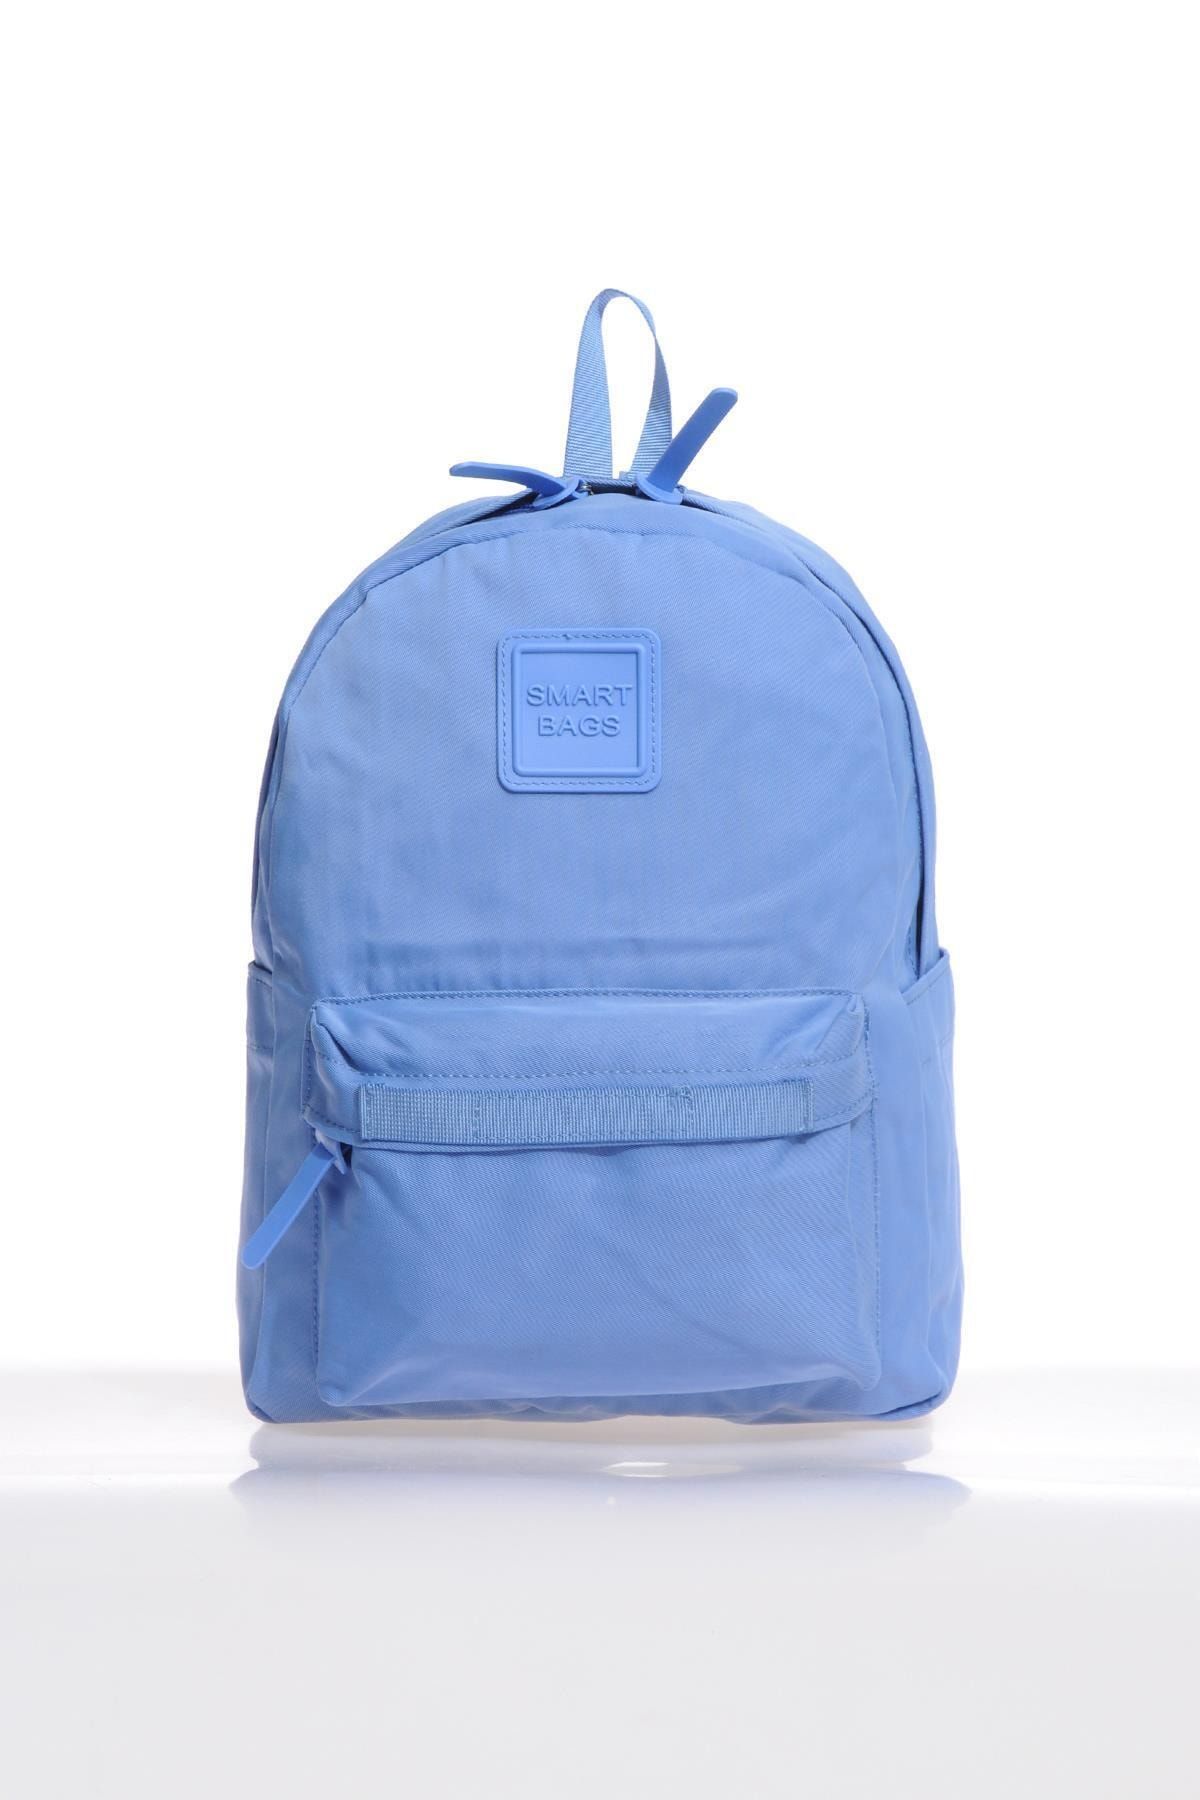 Smart Bags Smb6003-0031 Mavi Kadın Sırt Çantası